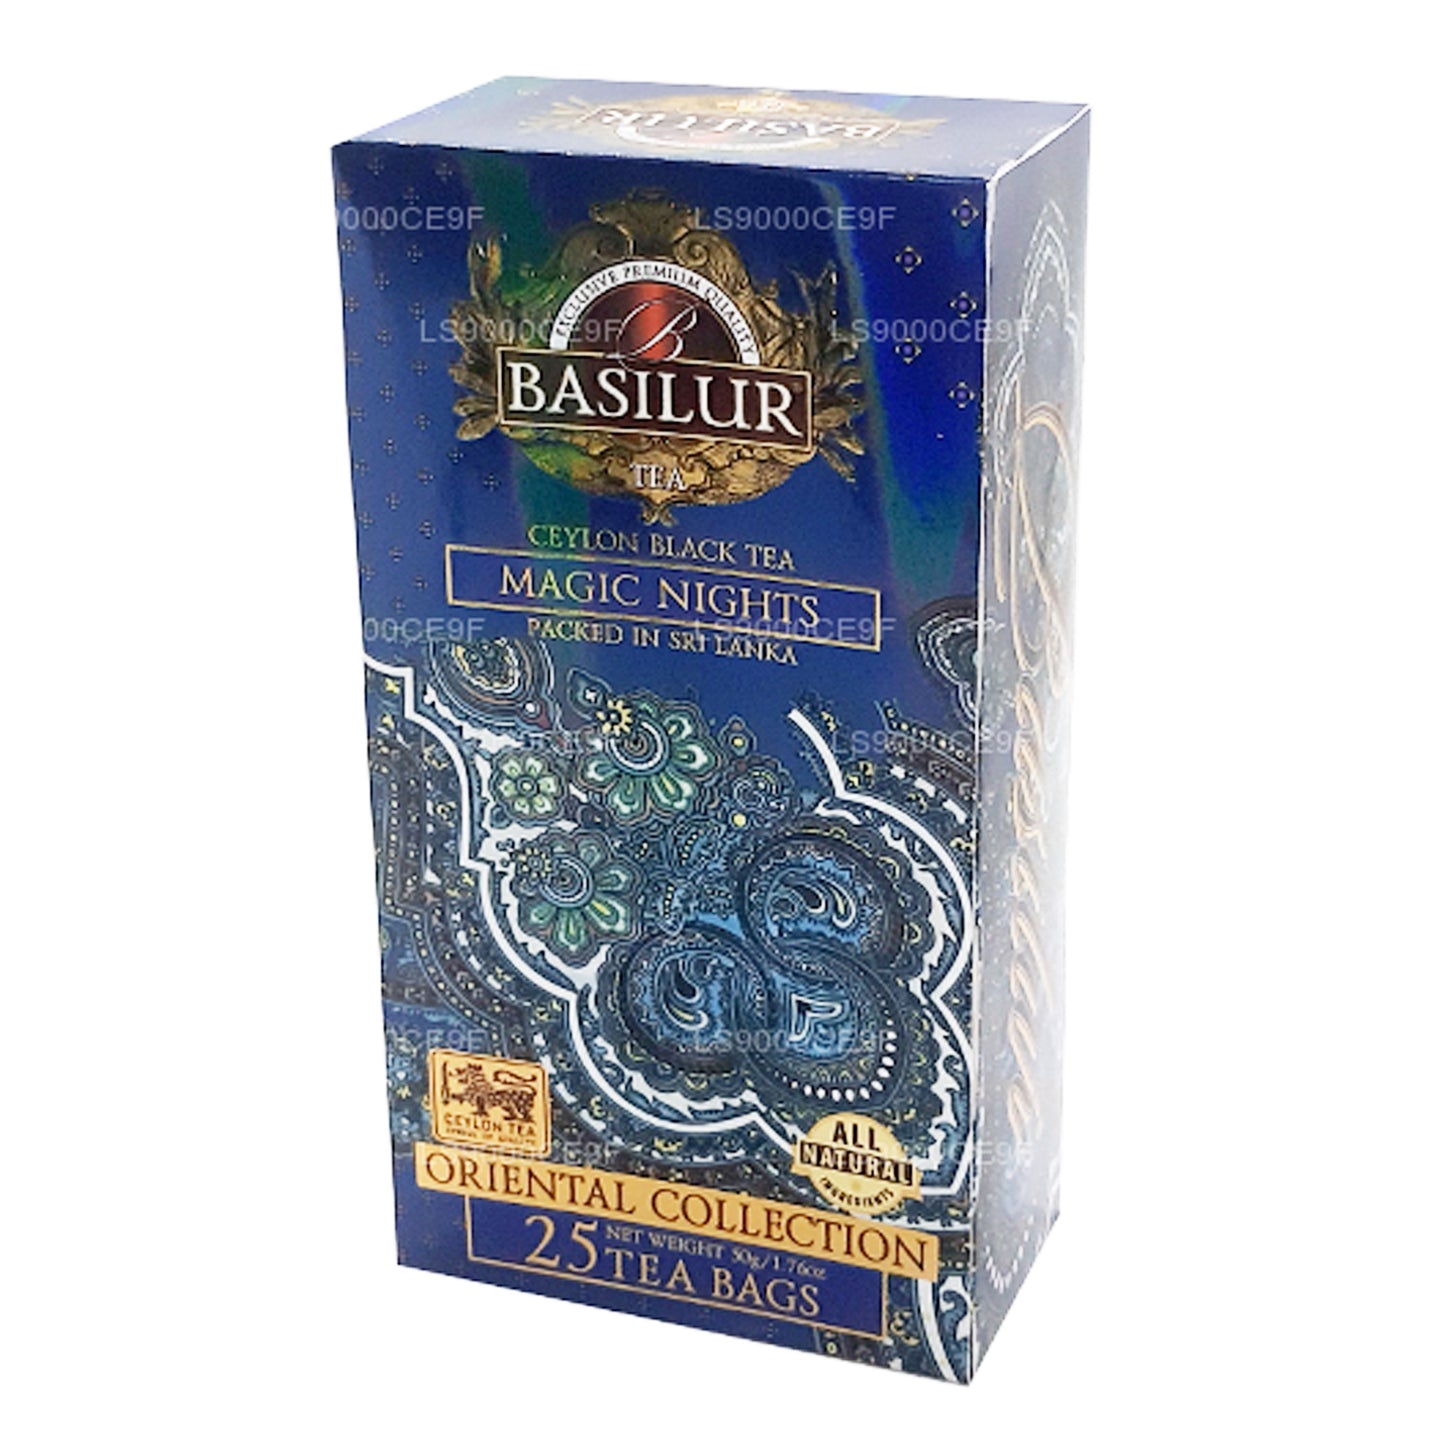 Basilur Magic Nights Oriental Collection (50g) 25 Tea Bags